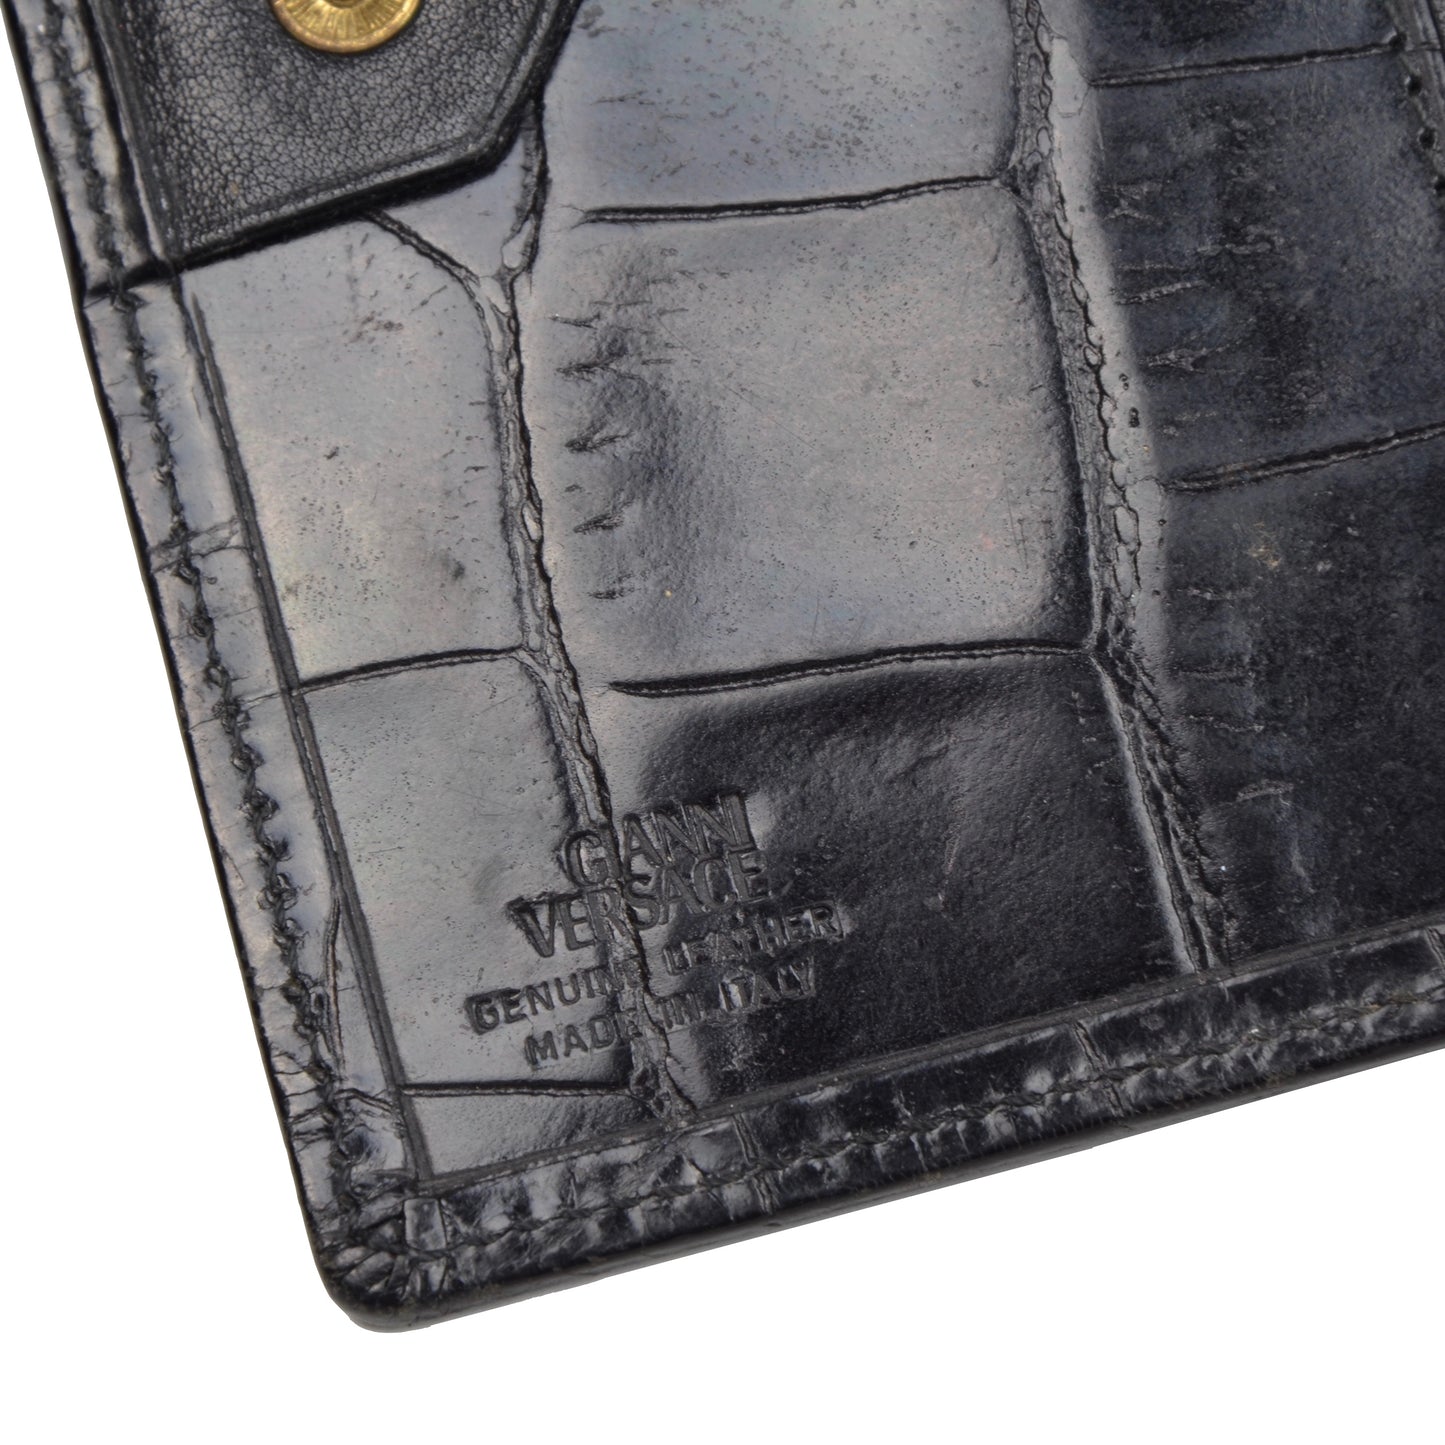 Vintage '90s Gianni Versace Leather Wallet - Black